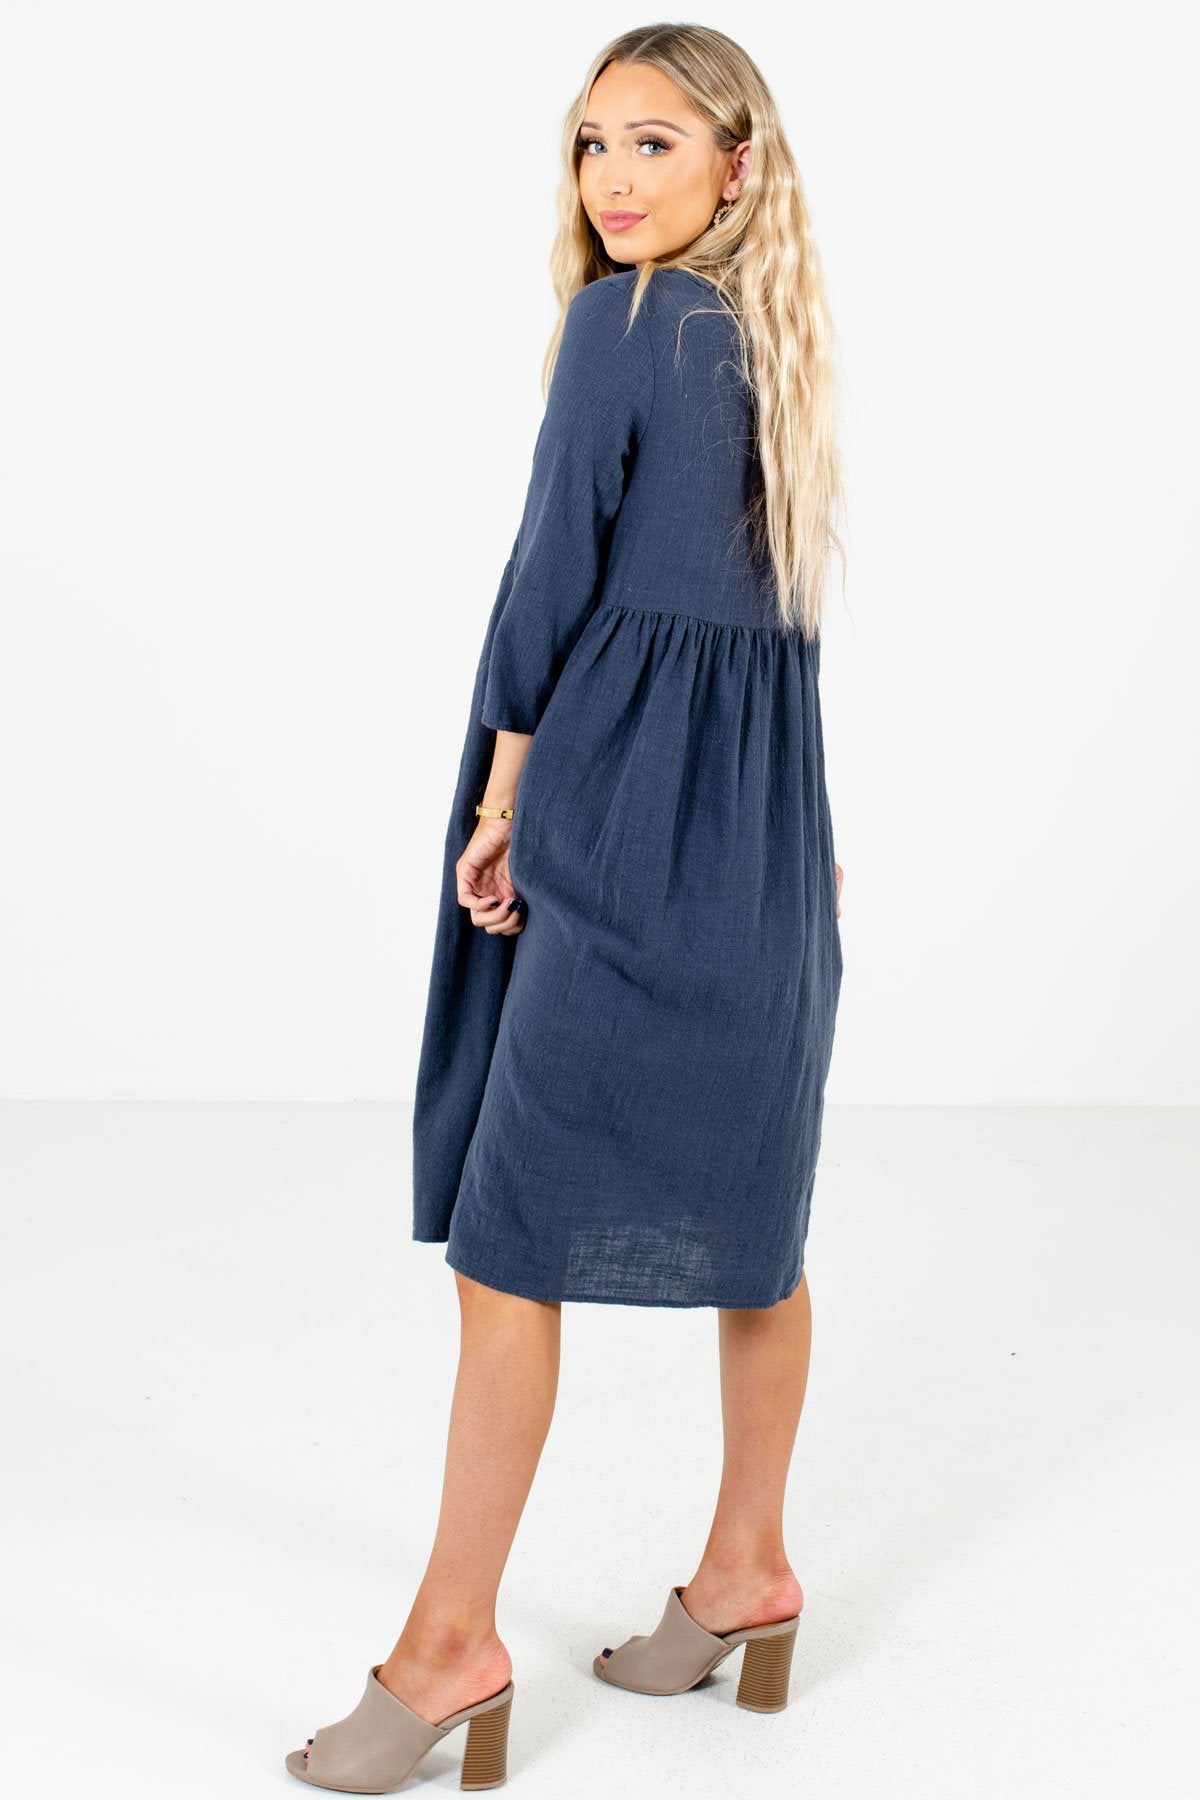 Blue ¾ Length Sleeve Boutique Dresses for Women